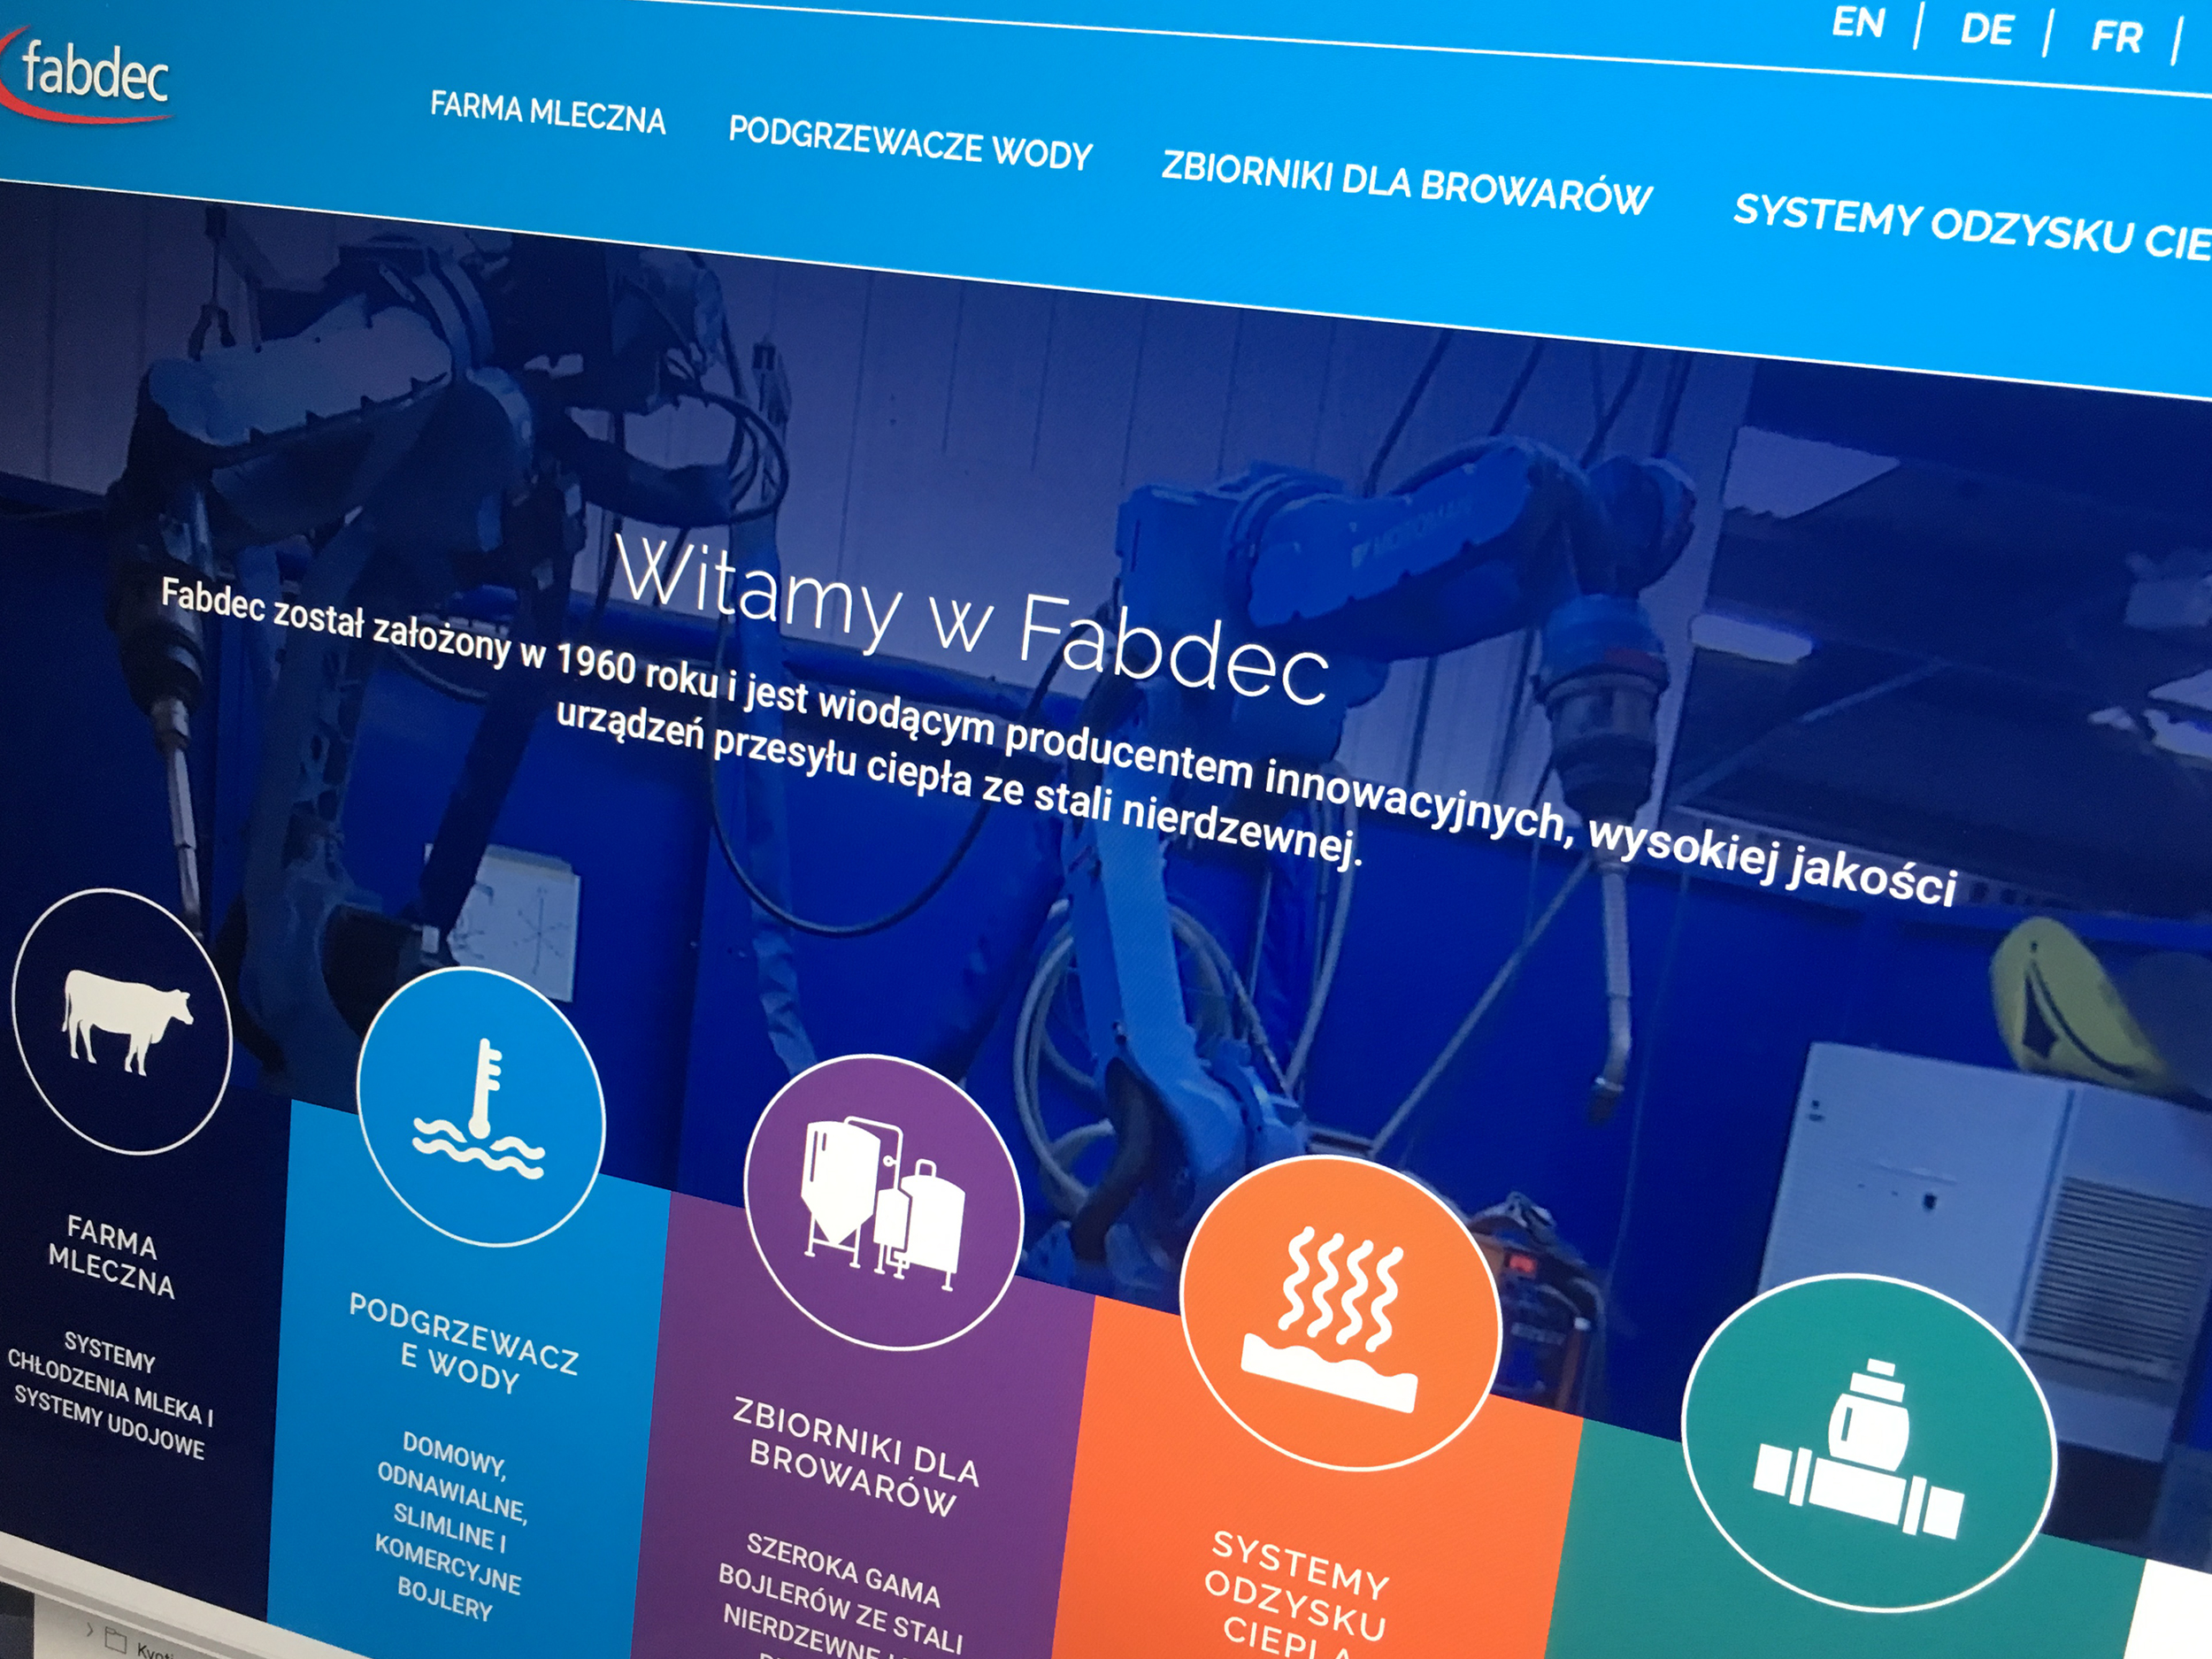 Fabdec website